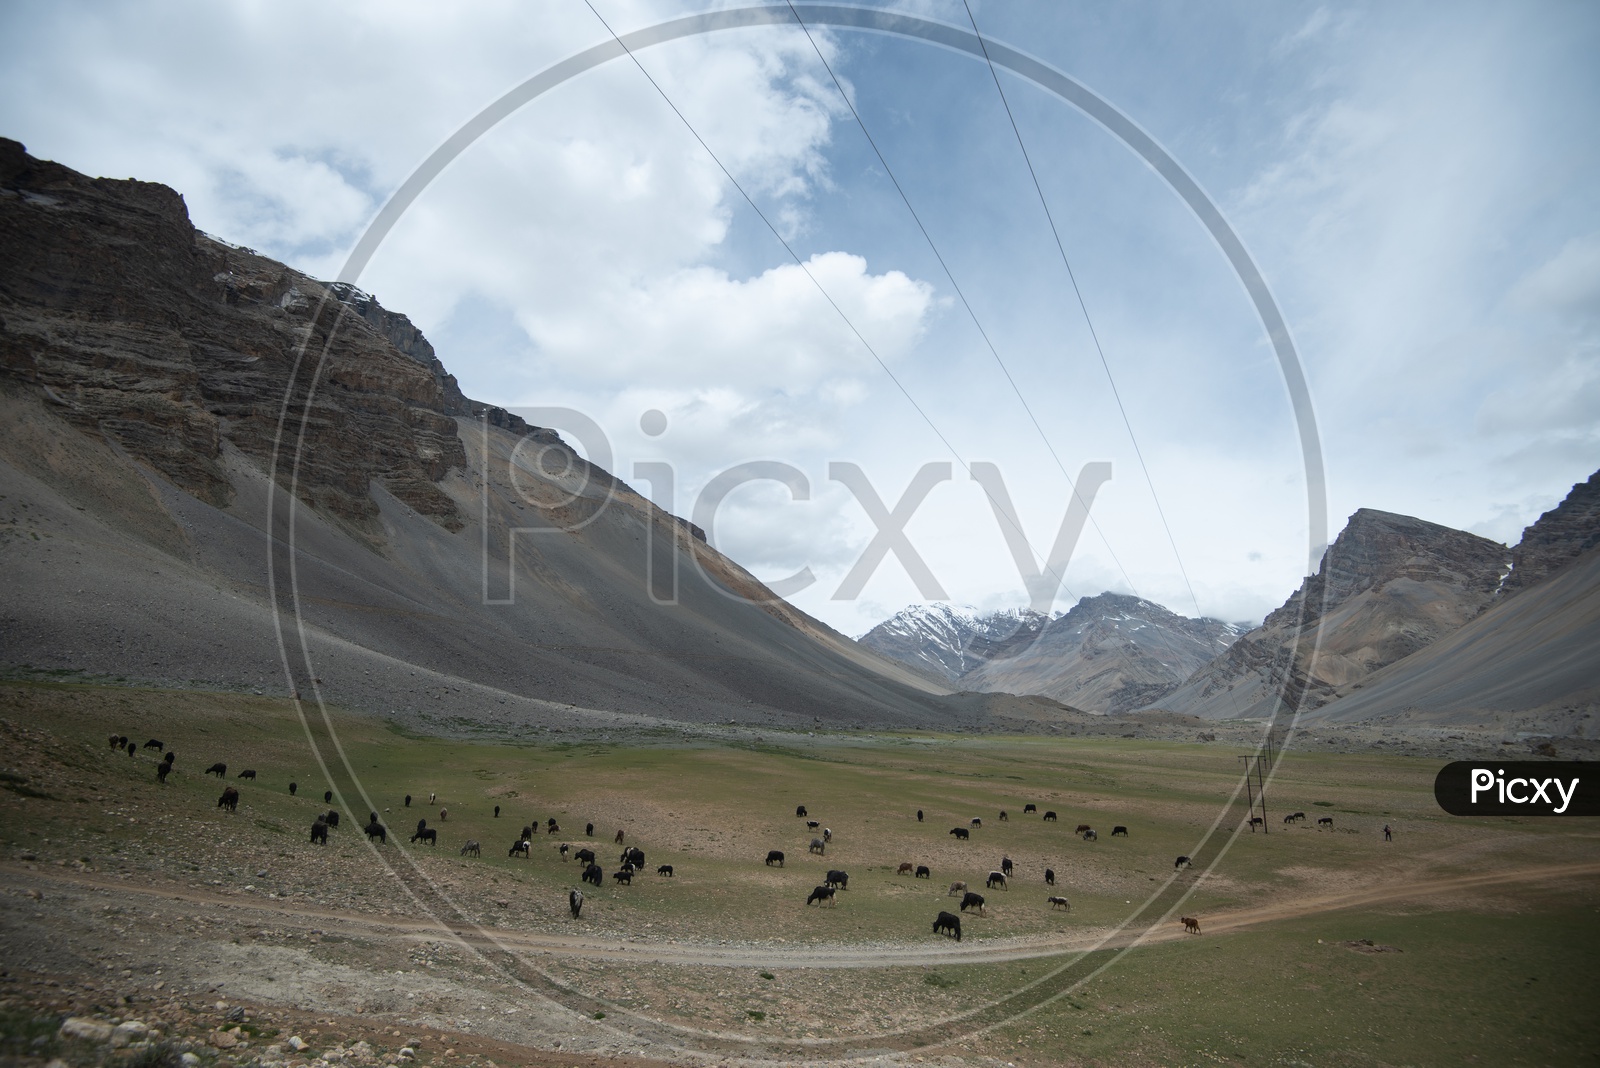 Valleys in Leh / Ladakh with Cattle having feed in Barn Land Grasses